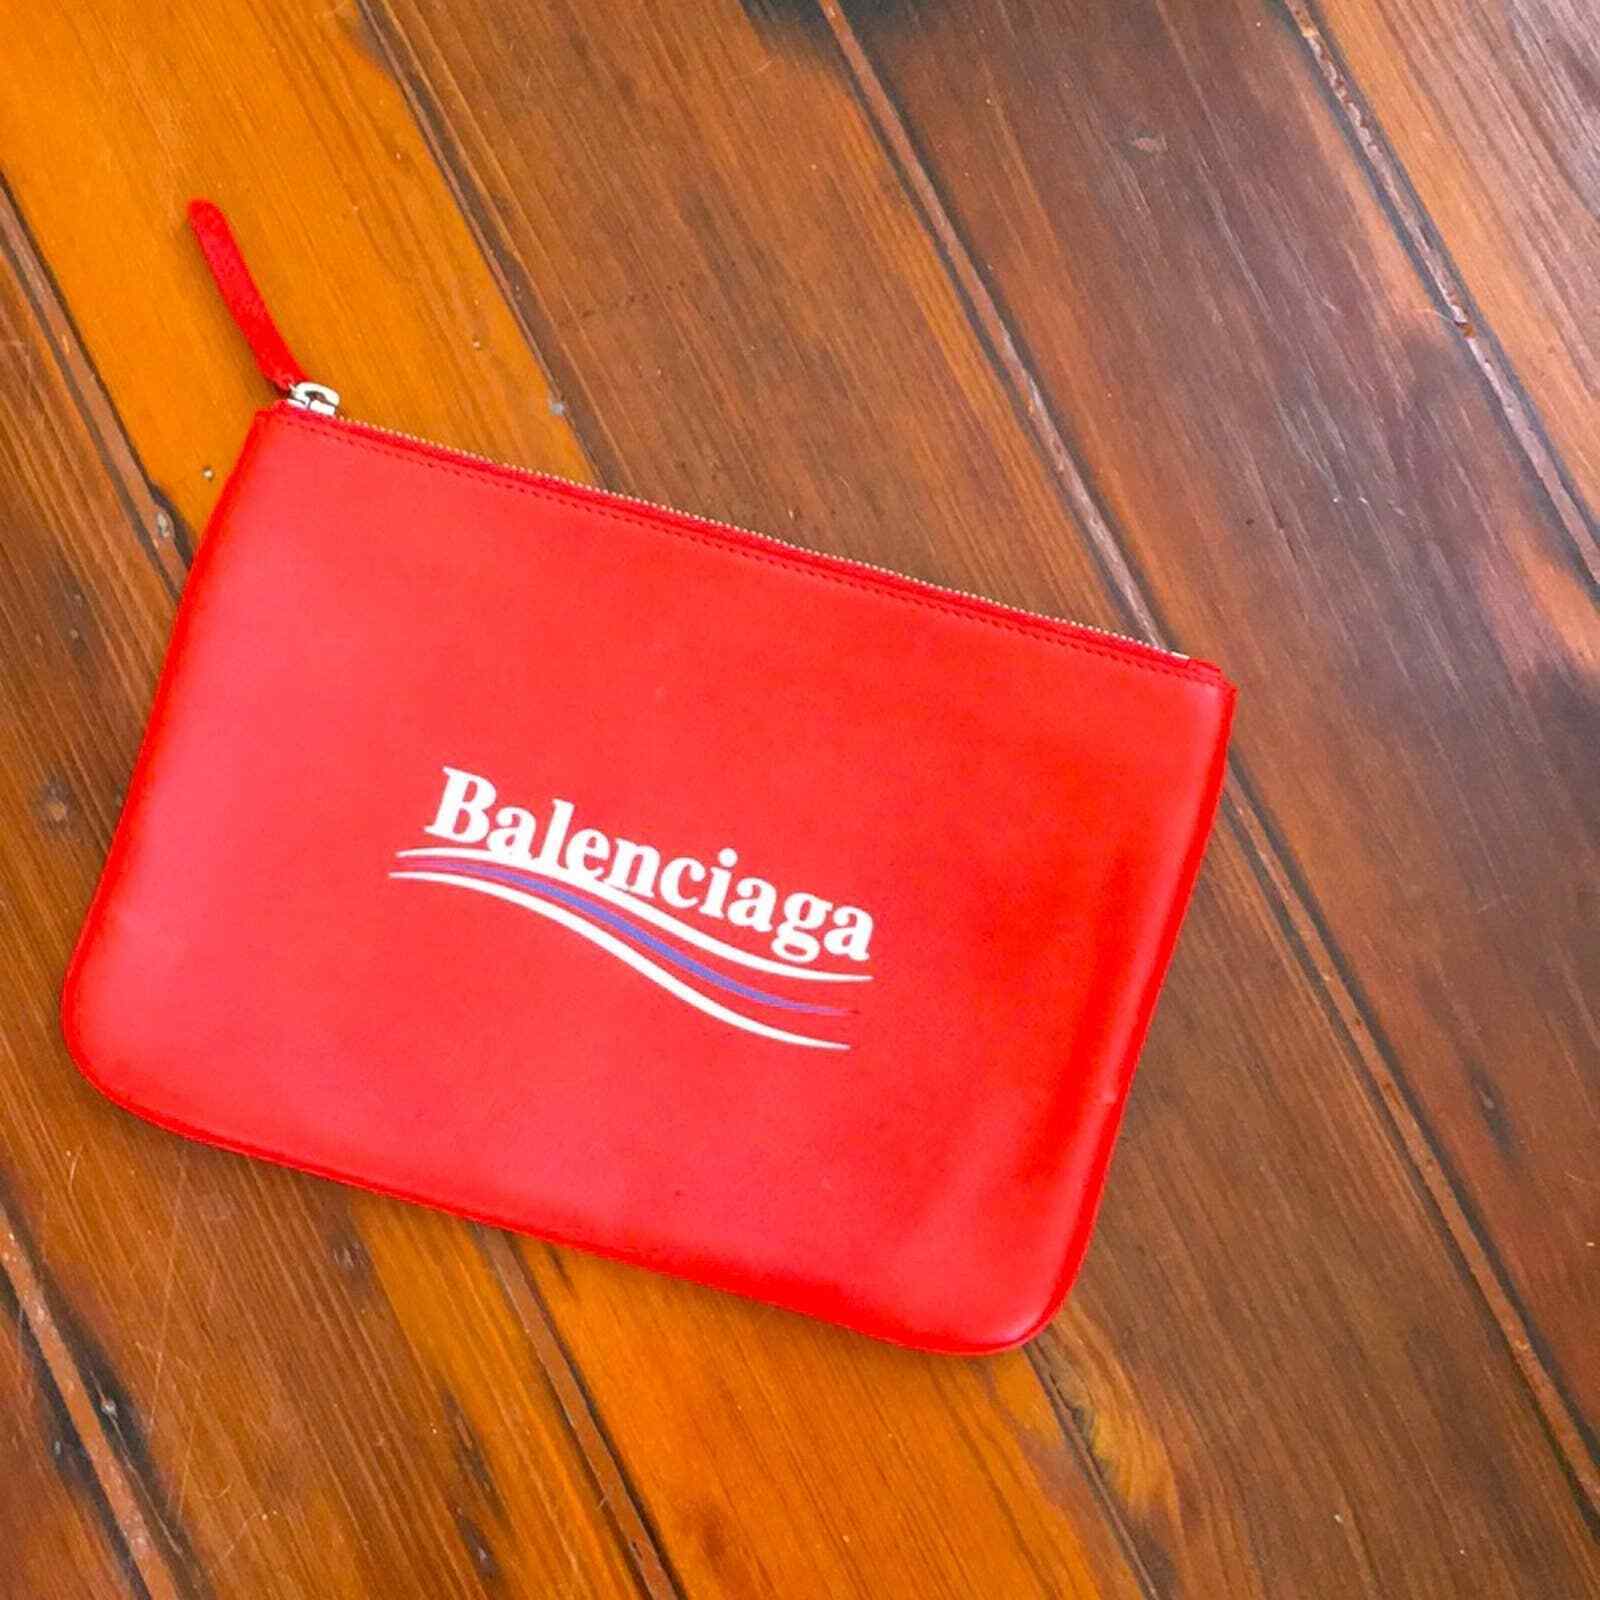 Balenciaga leather logo zipper pouch clutch